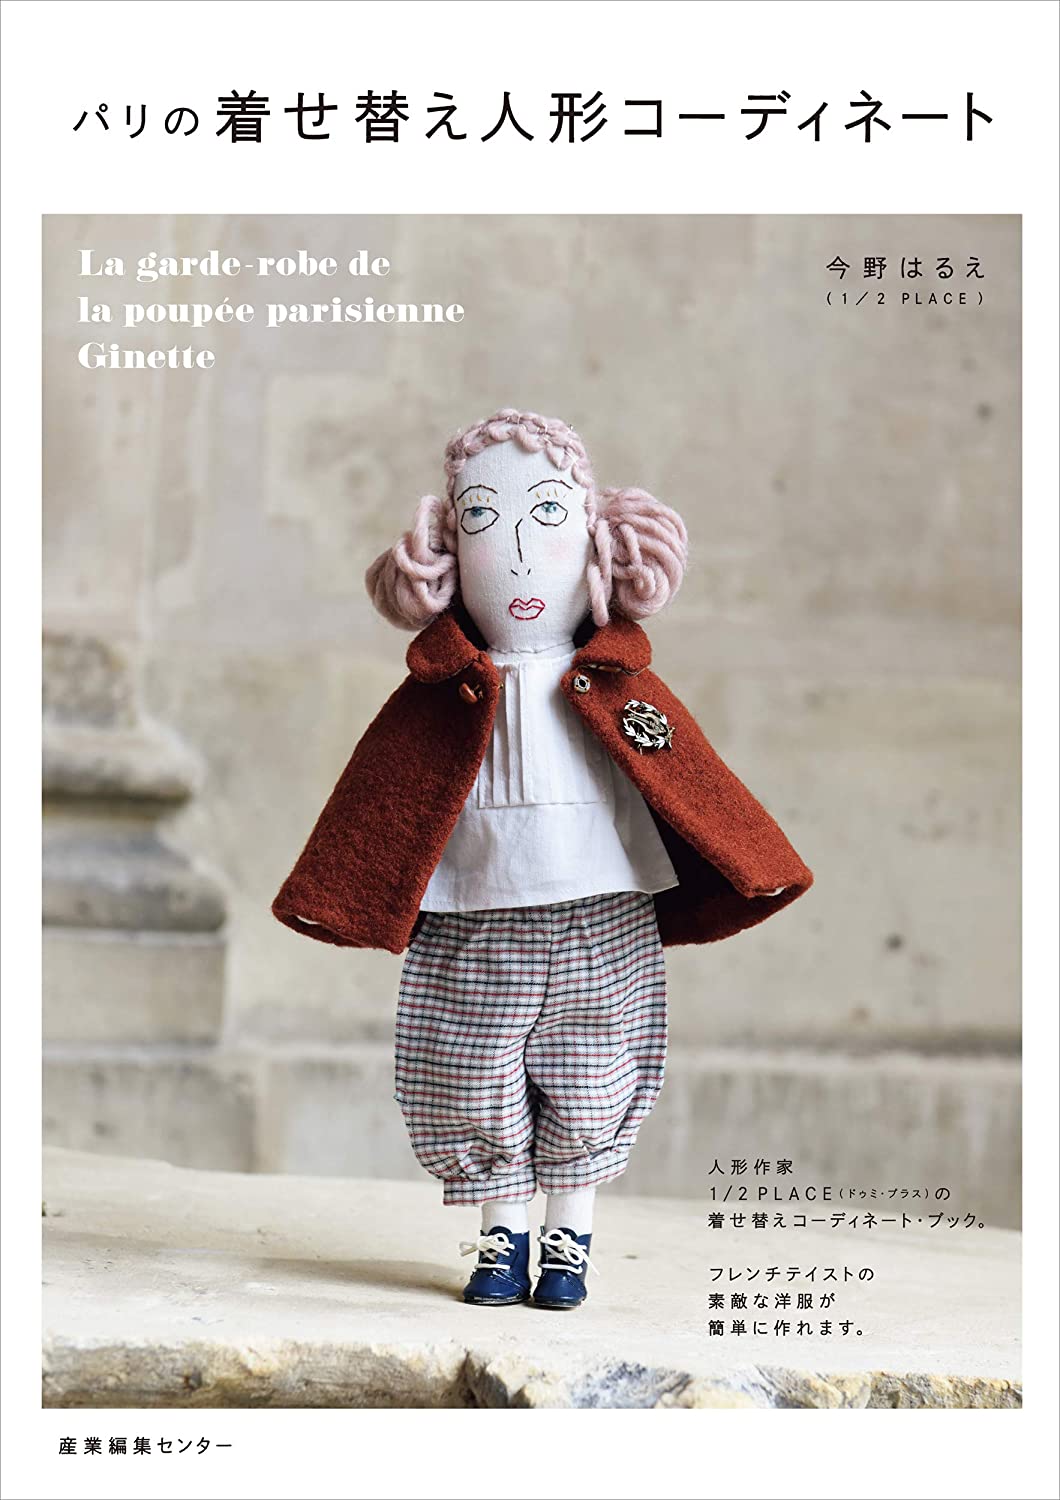 Paris dress-up doll coordination